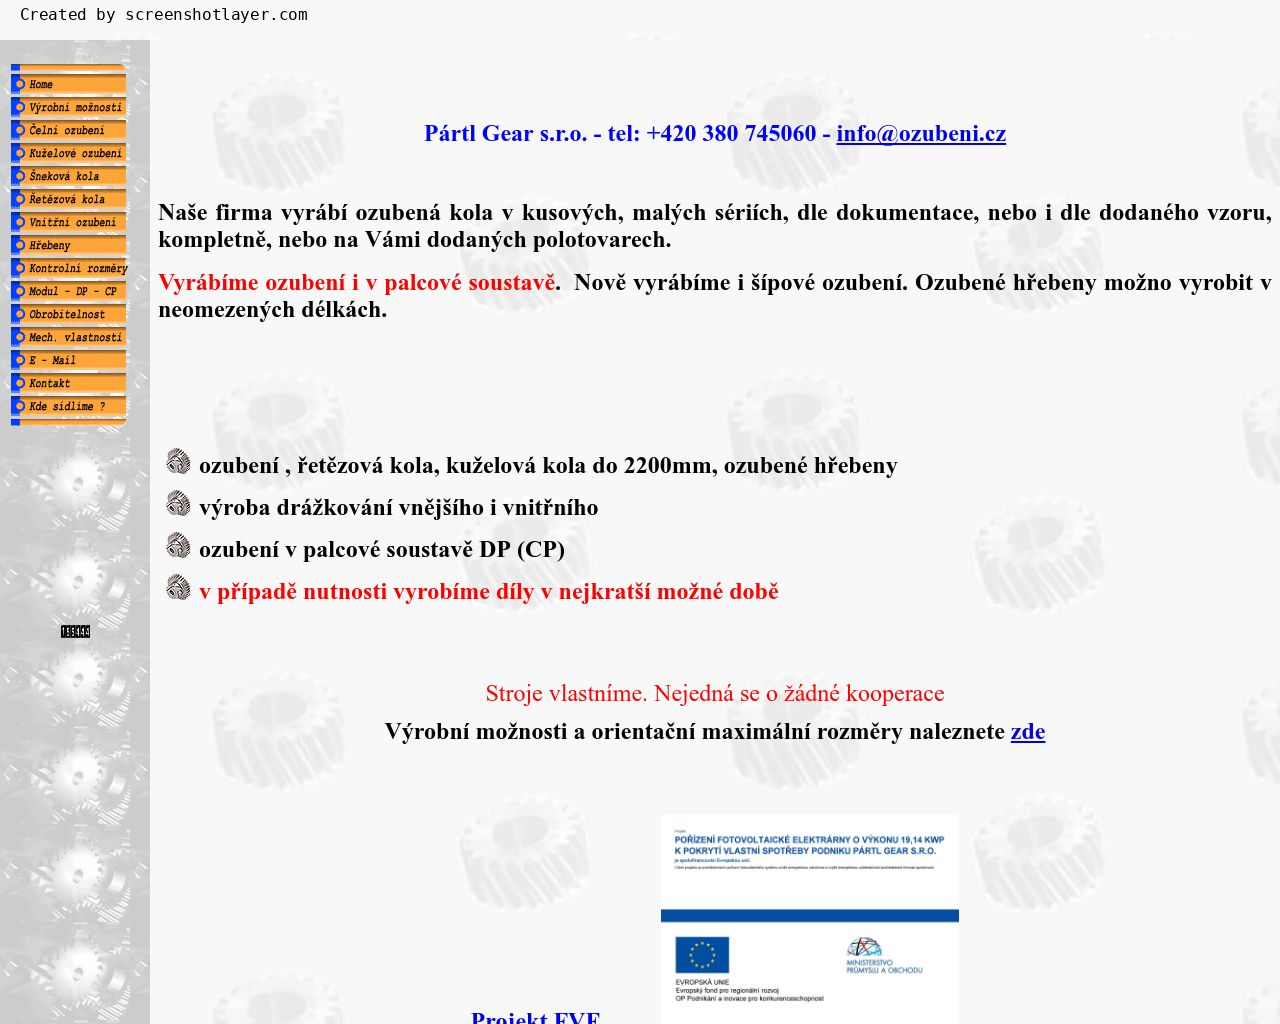 Site Image ozubeni.cz v 1280x1024